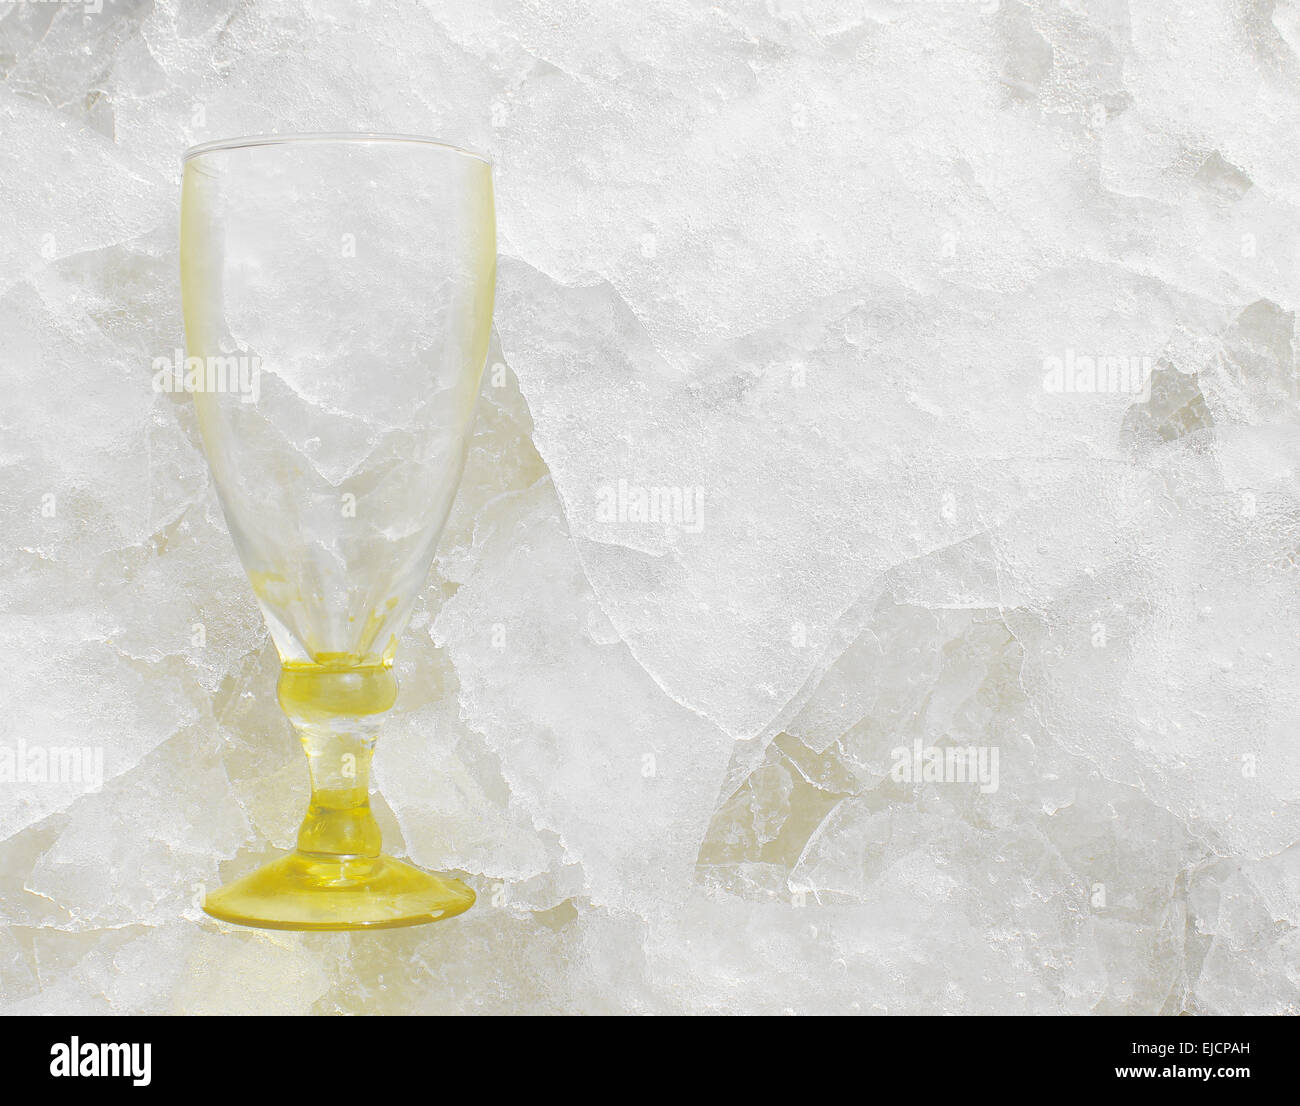 https://c8.alamy.com/comp/EJCPAH/empty-wine-glass-on-ice-slabs-shards-EJCPAH.jpg